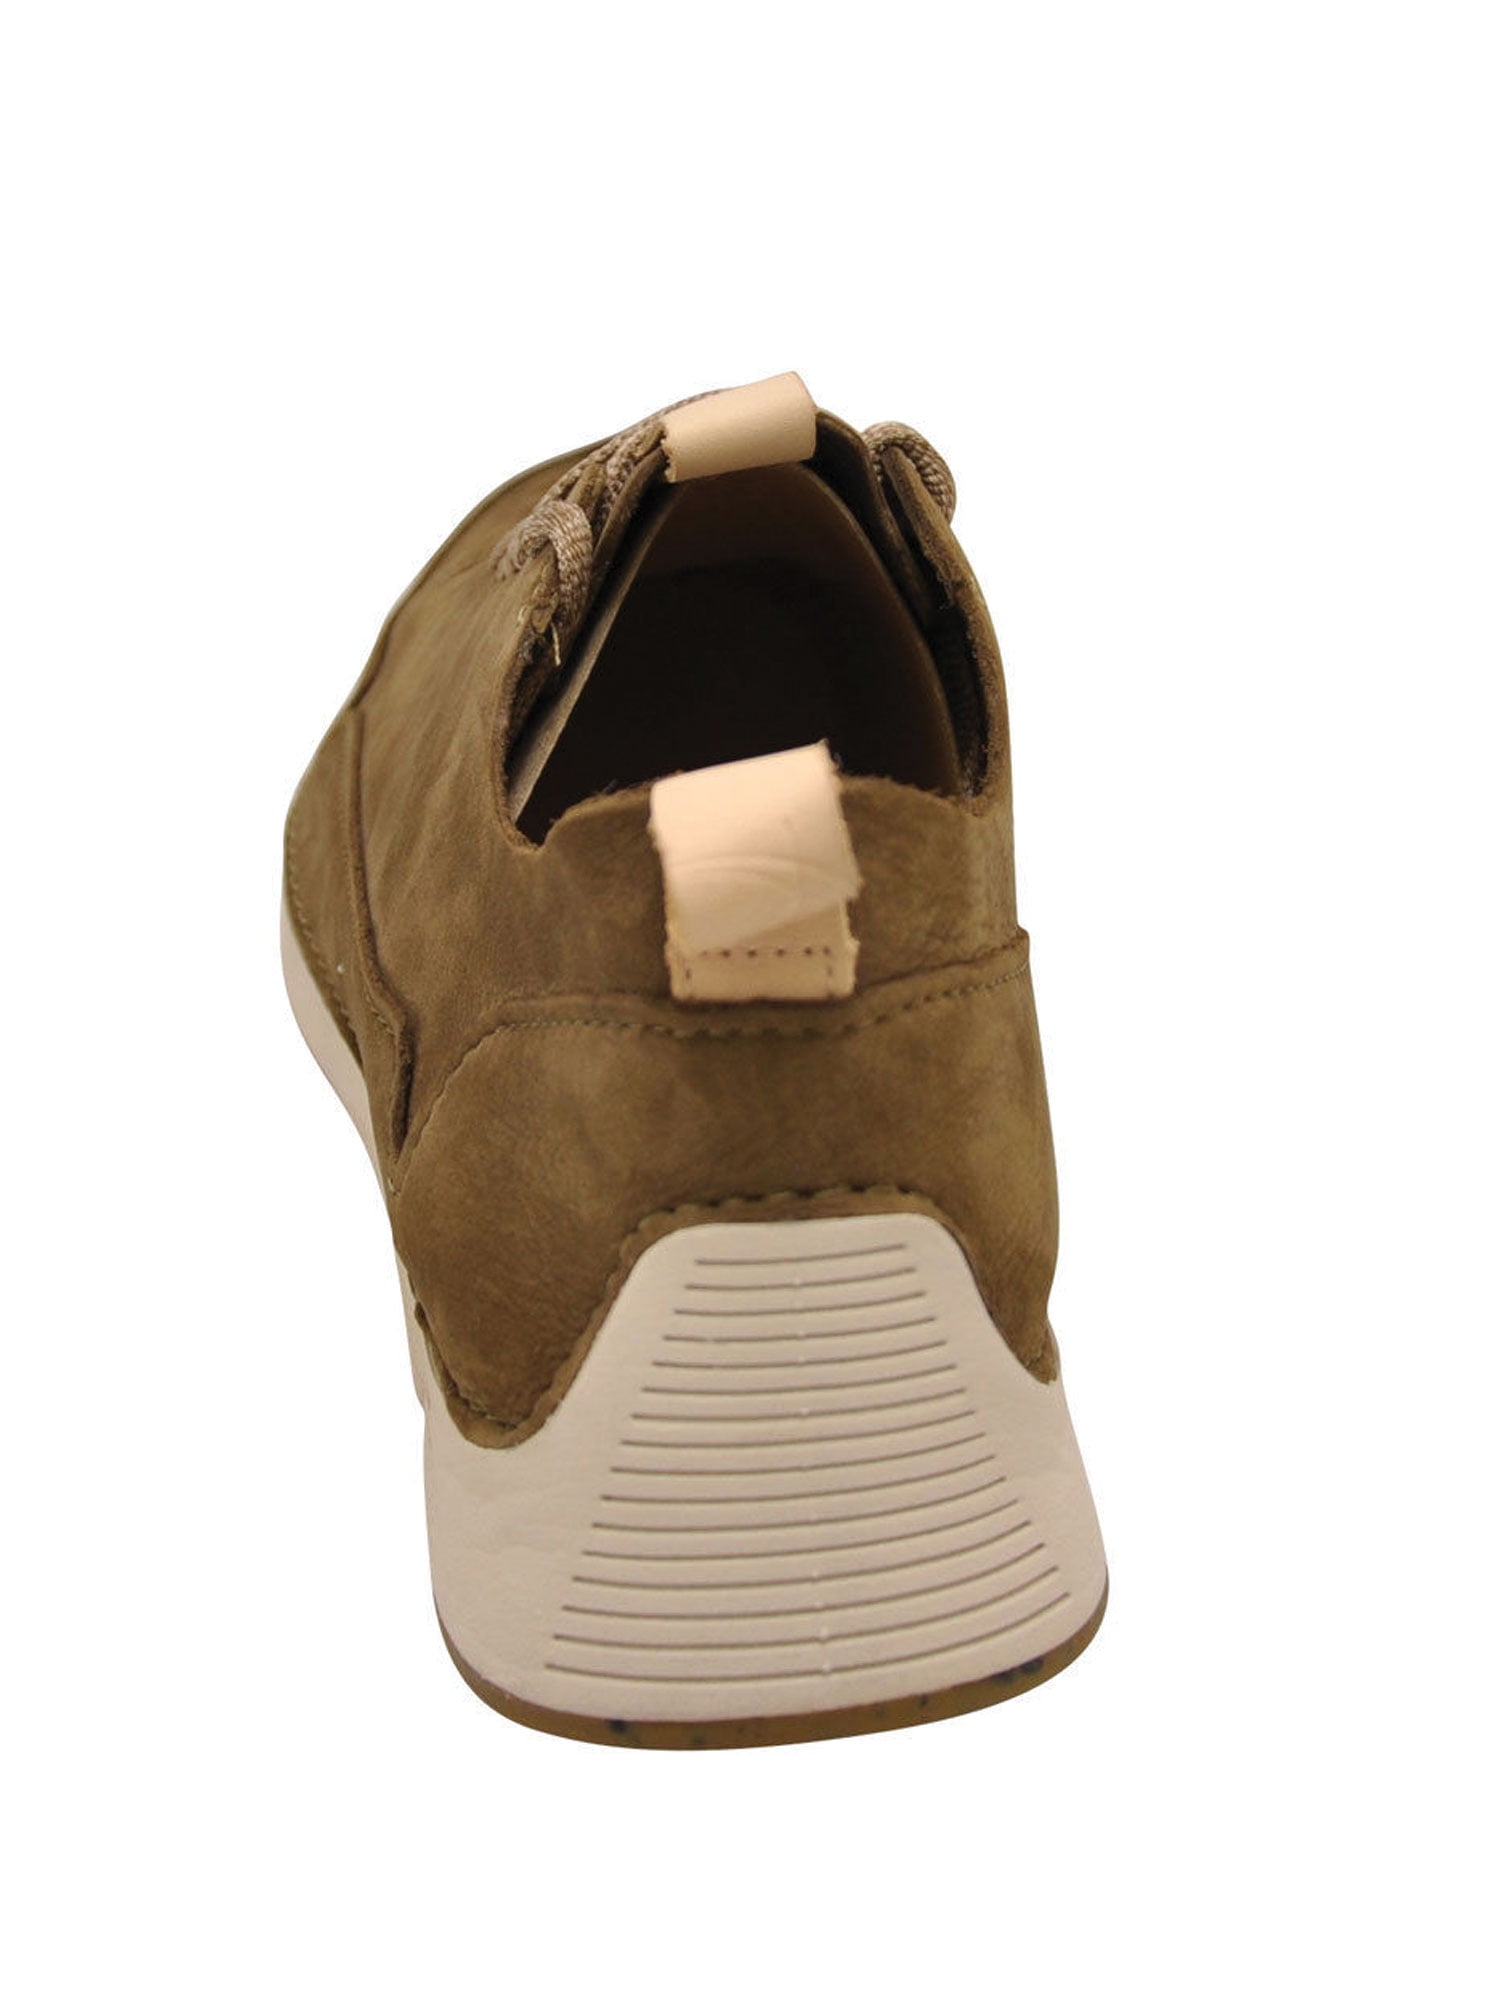 Men's Shoes Clarks TRI SPARK Nubuck Lace Up Athletic Sneakers 35655 KHAKI *New*